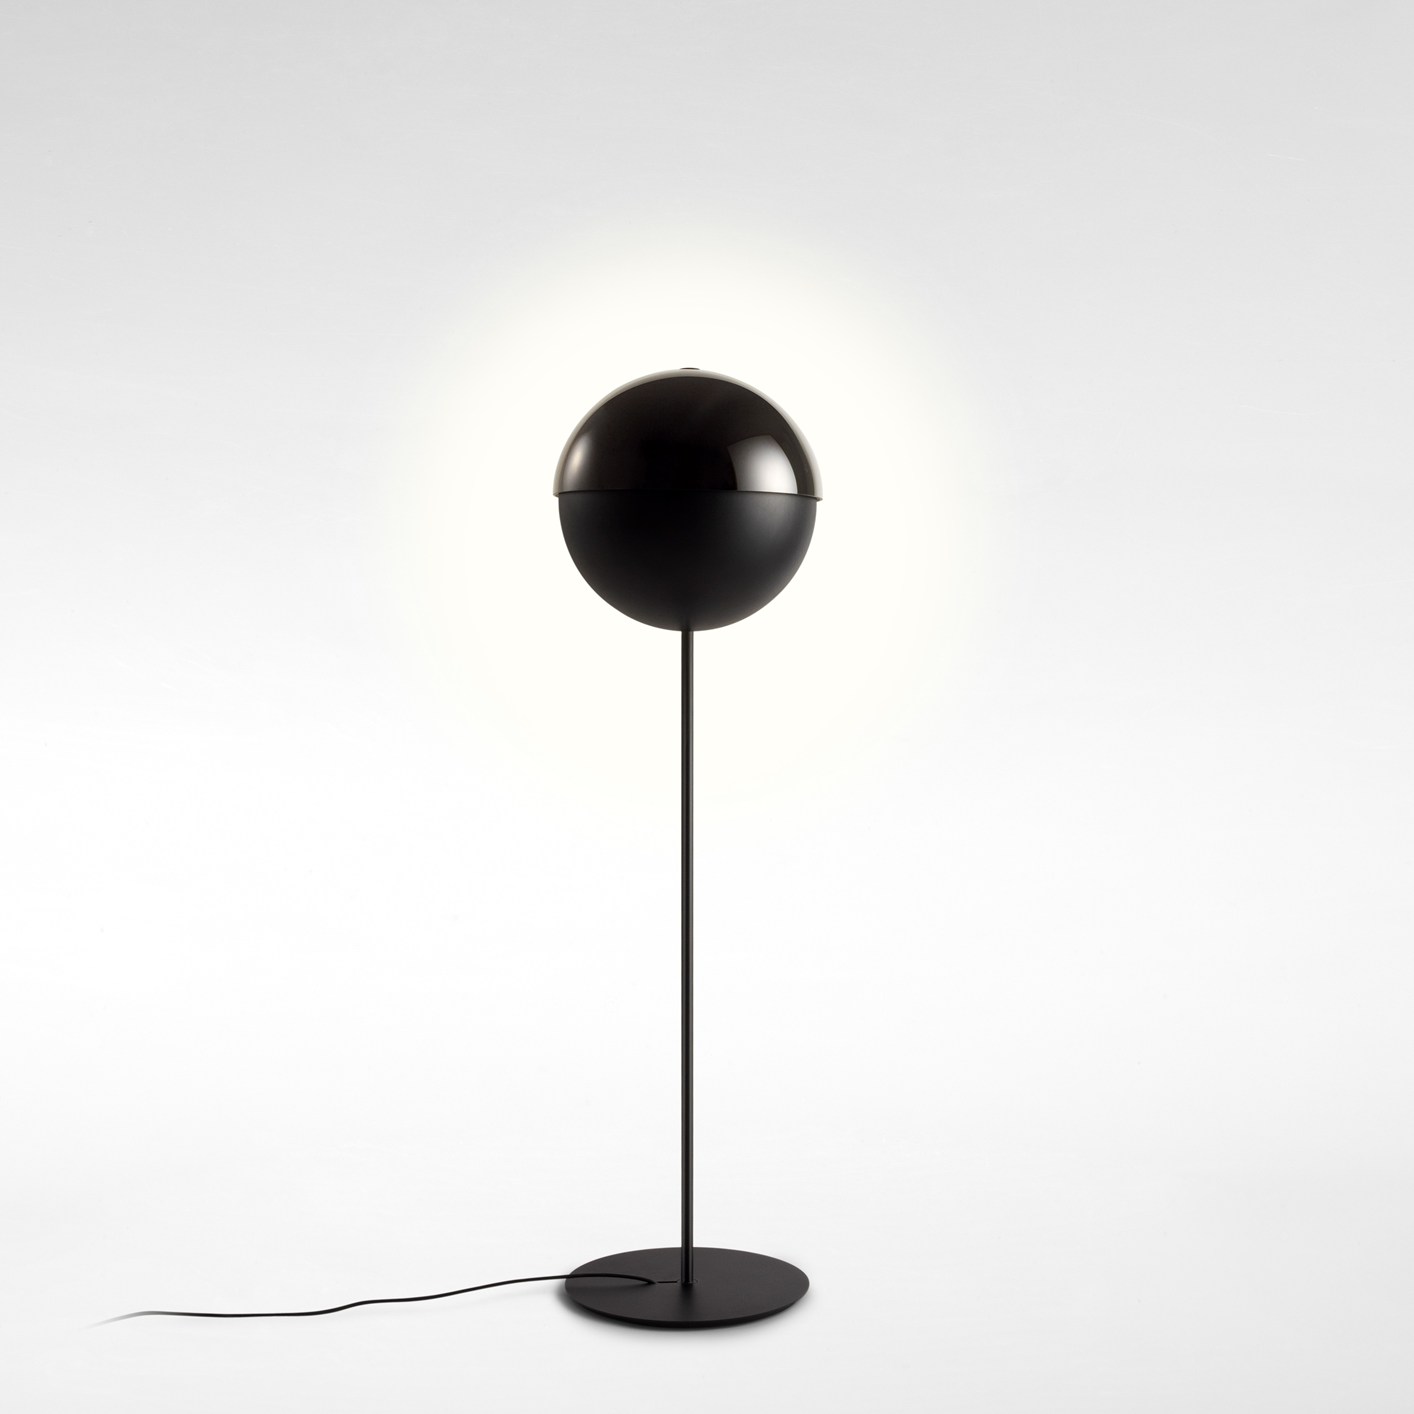 Theia Lamp by Mathias Hahn for Marset.